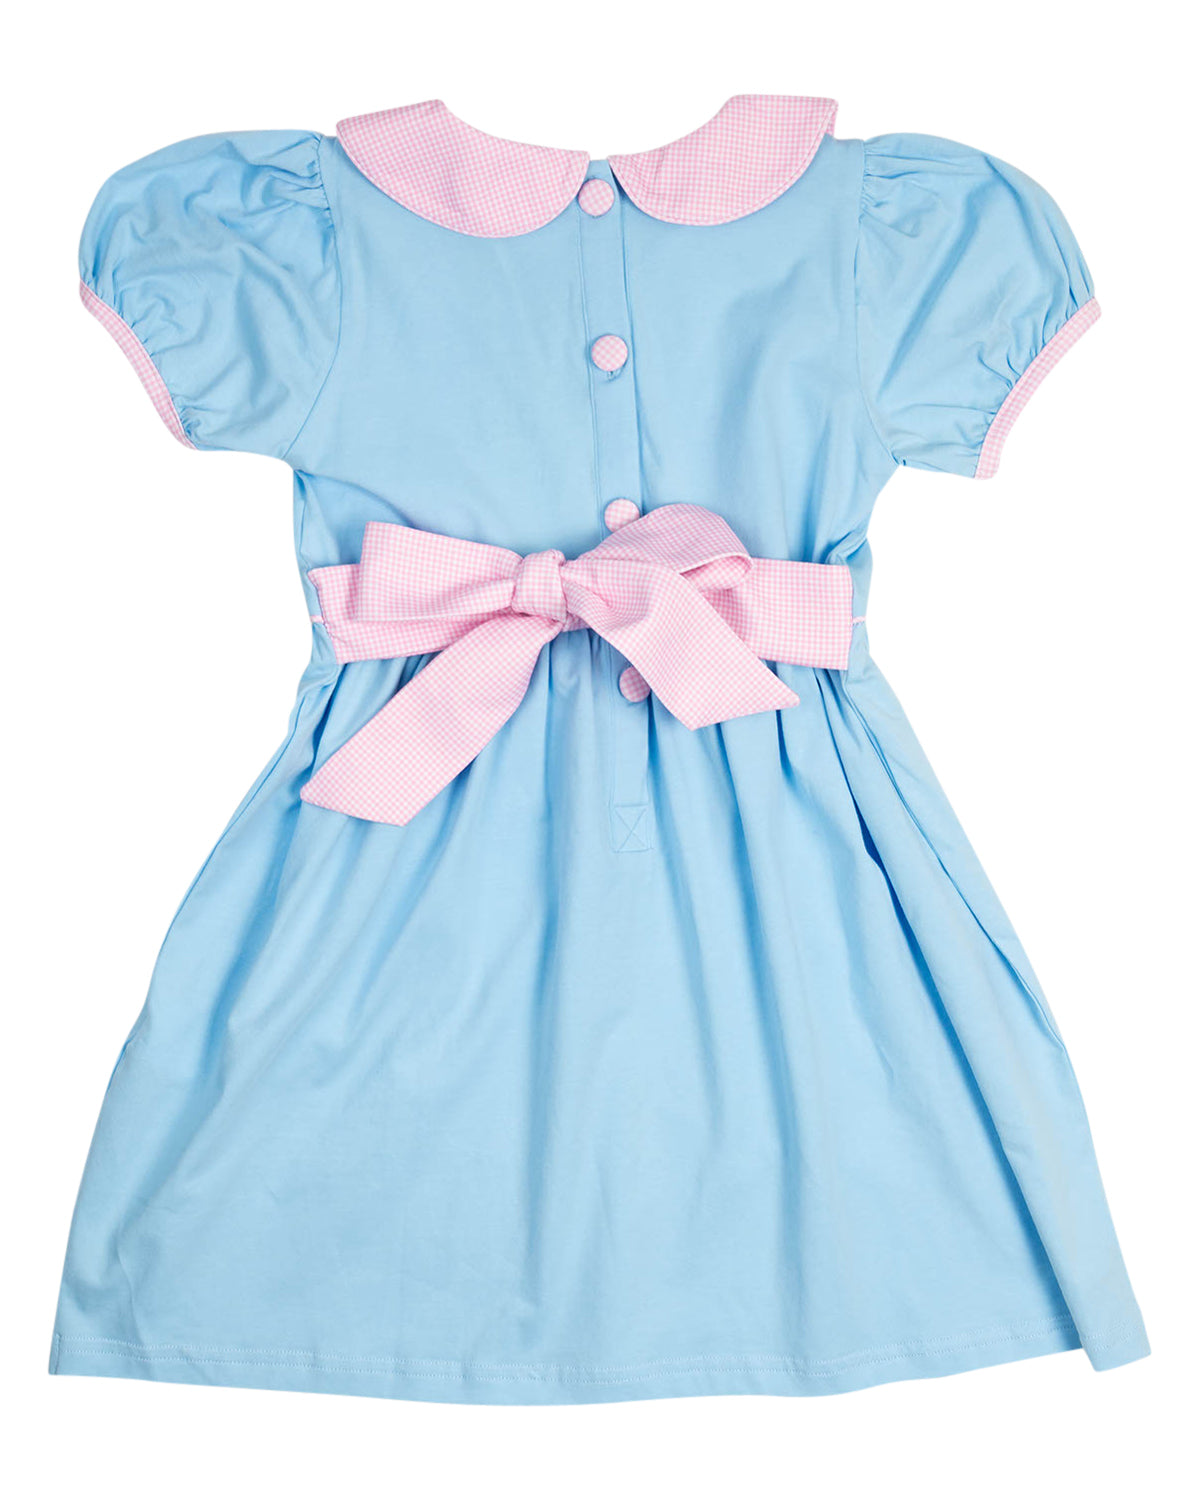 Blue and Pink Knit Peter Pan Dress